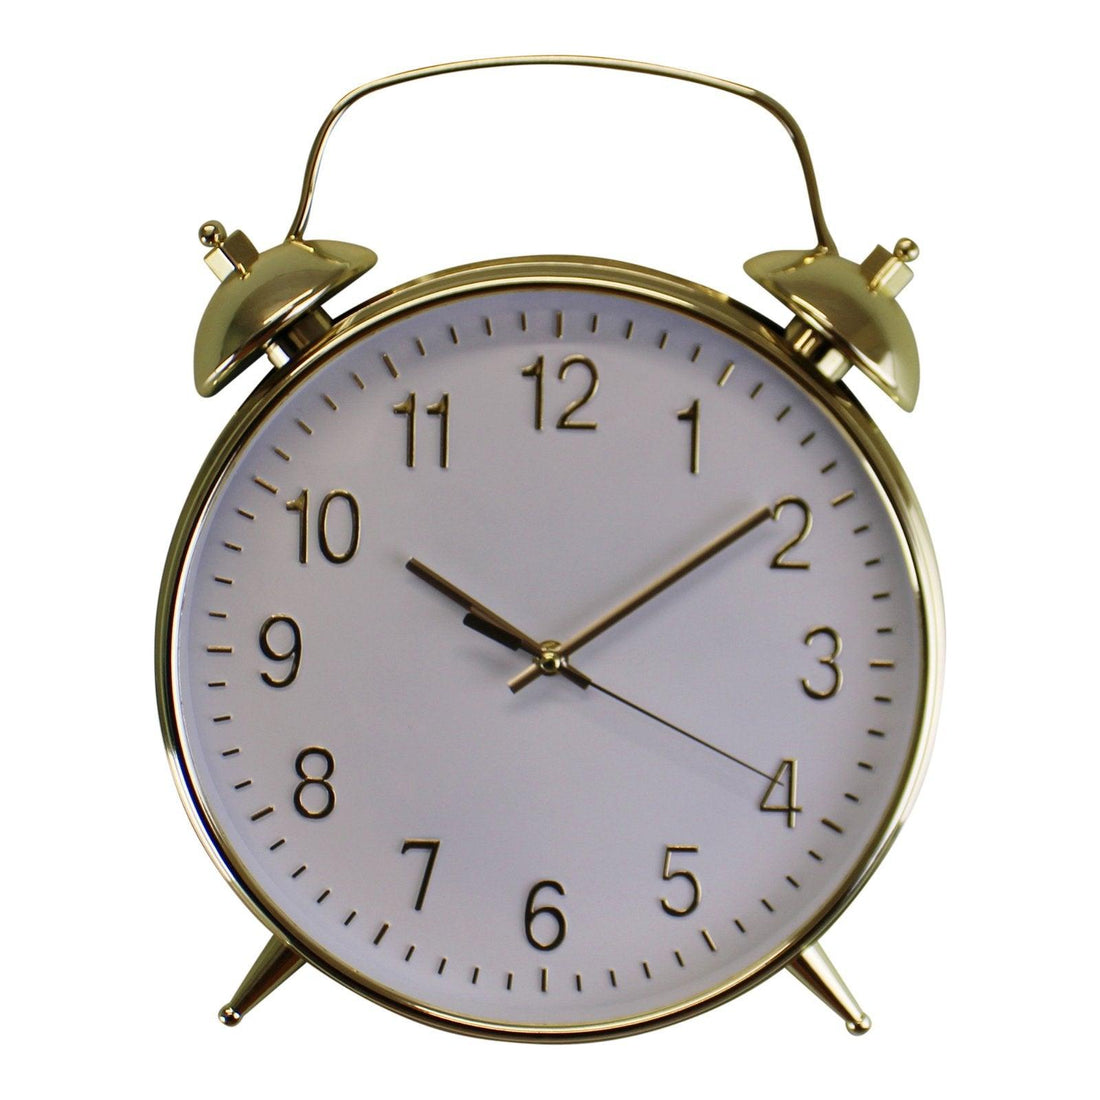 Alarm Style Gold & White Wall Clock - £27.99 - Wall Hanging Clocks 